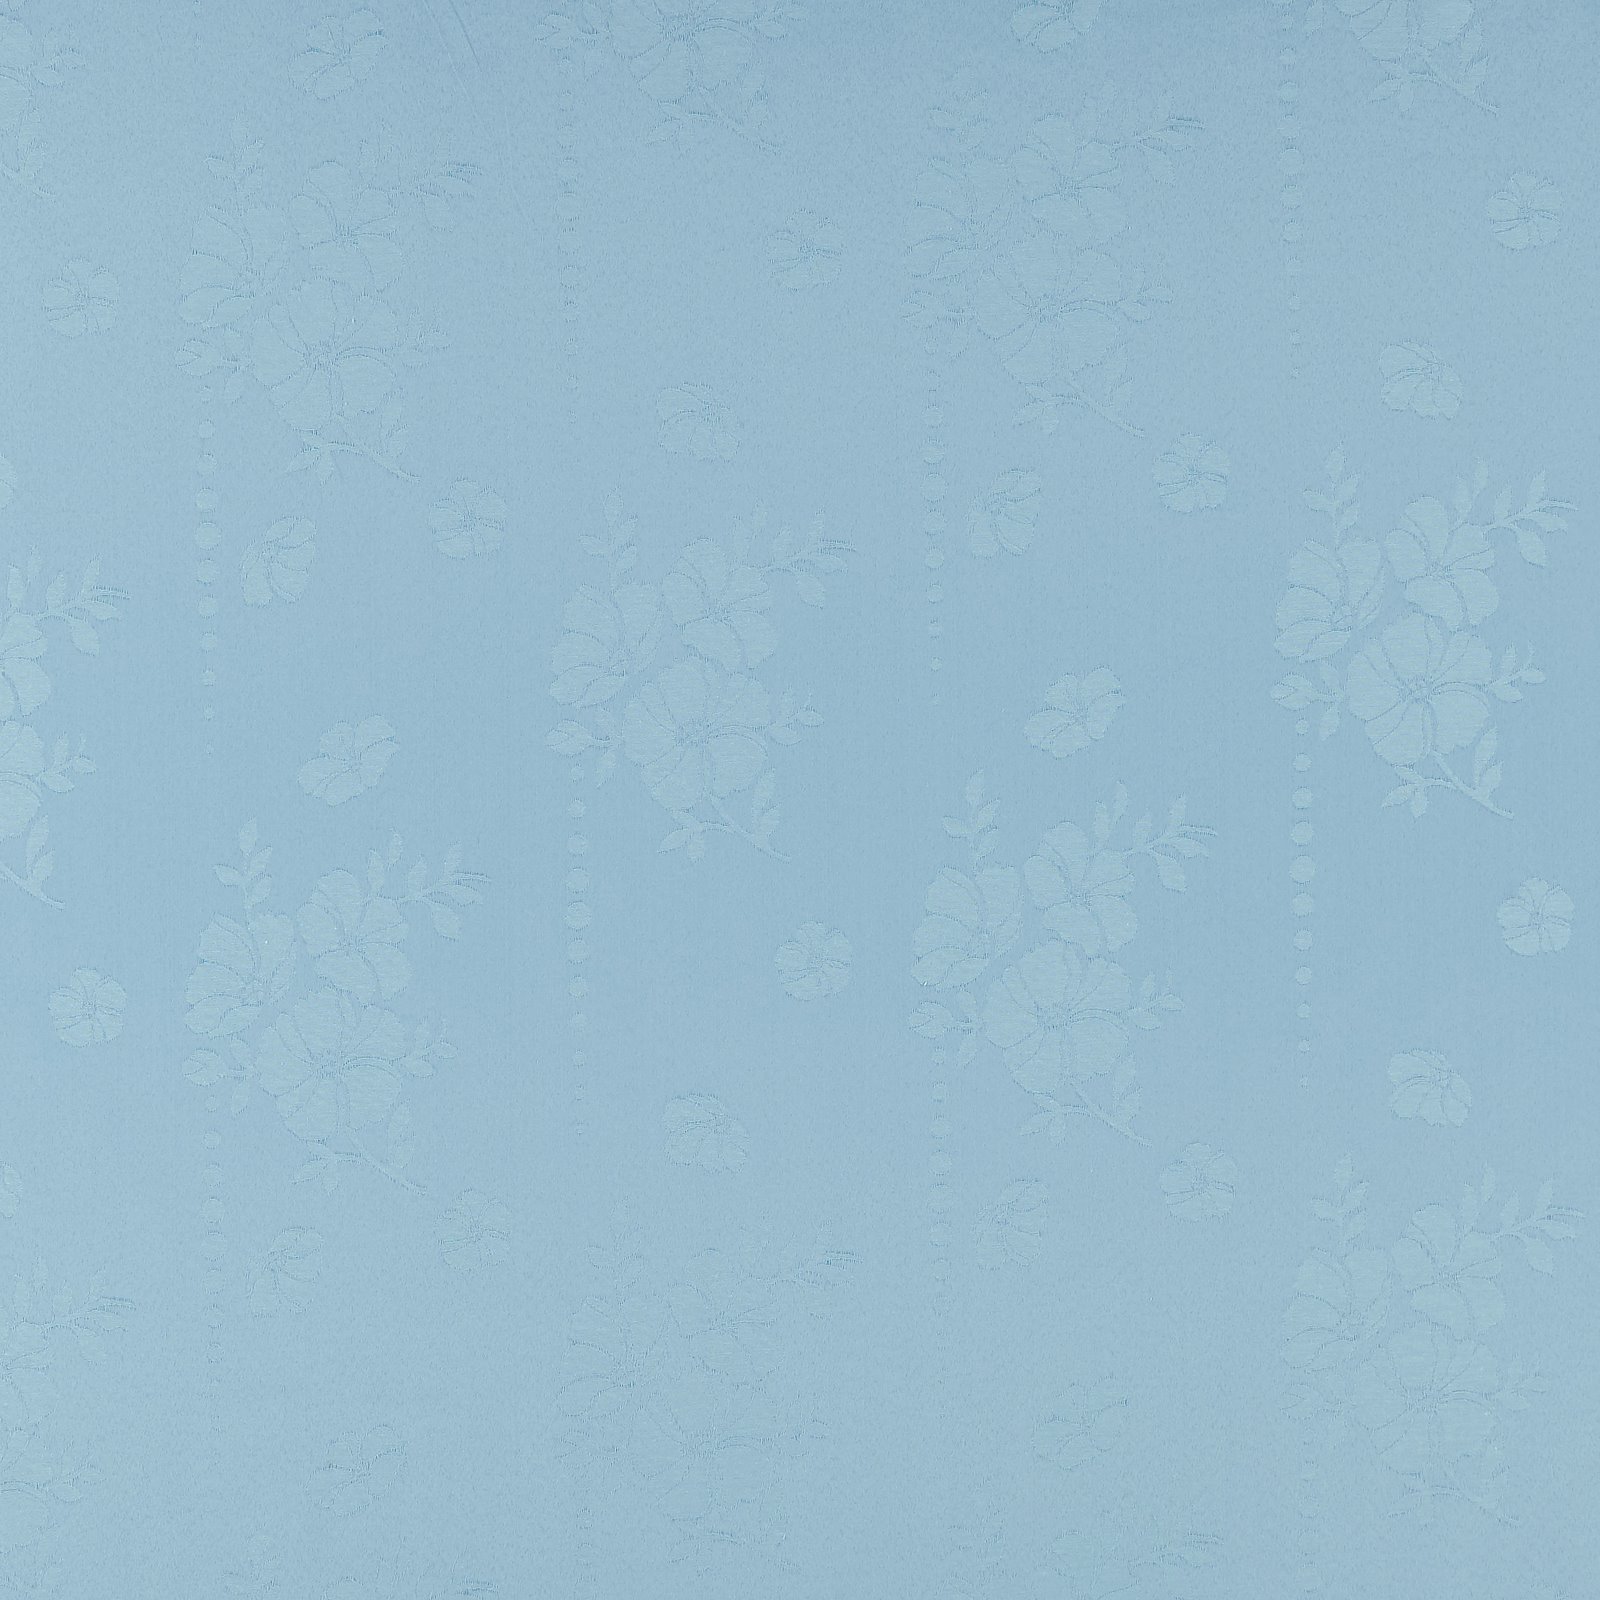 Jaquard klar blau mit Blumen u. Punkten 803854_pack_sp